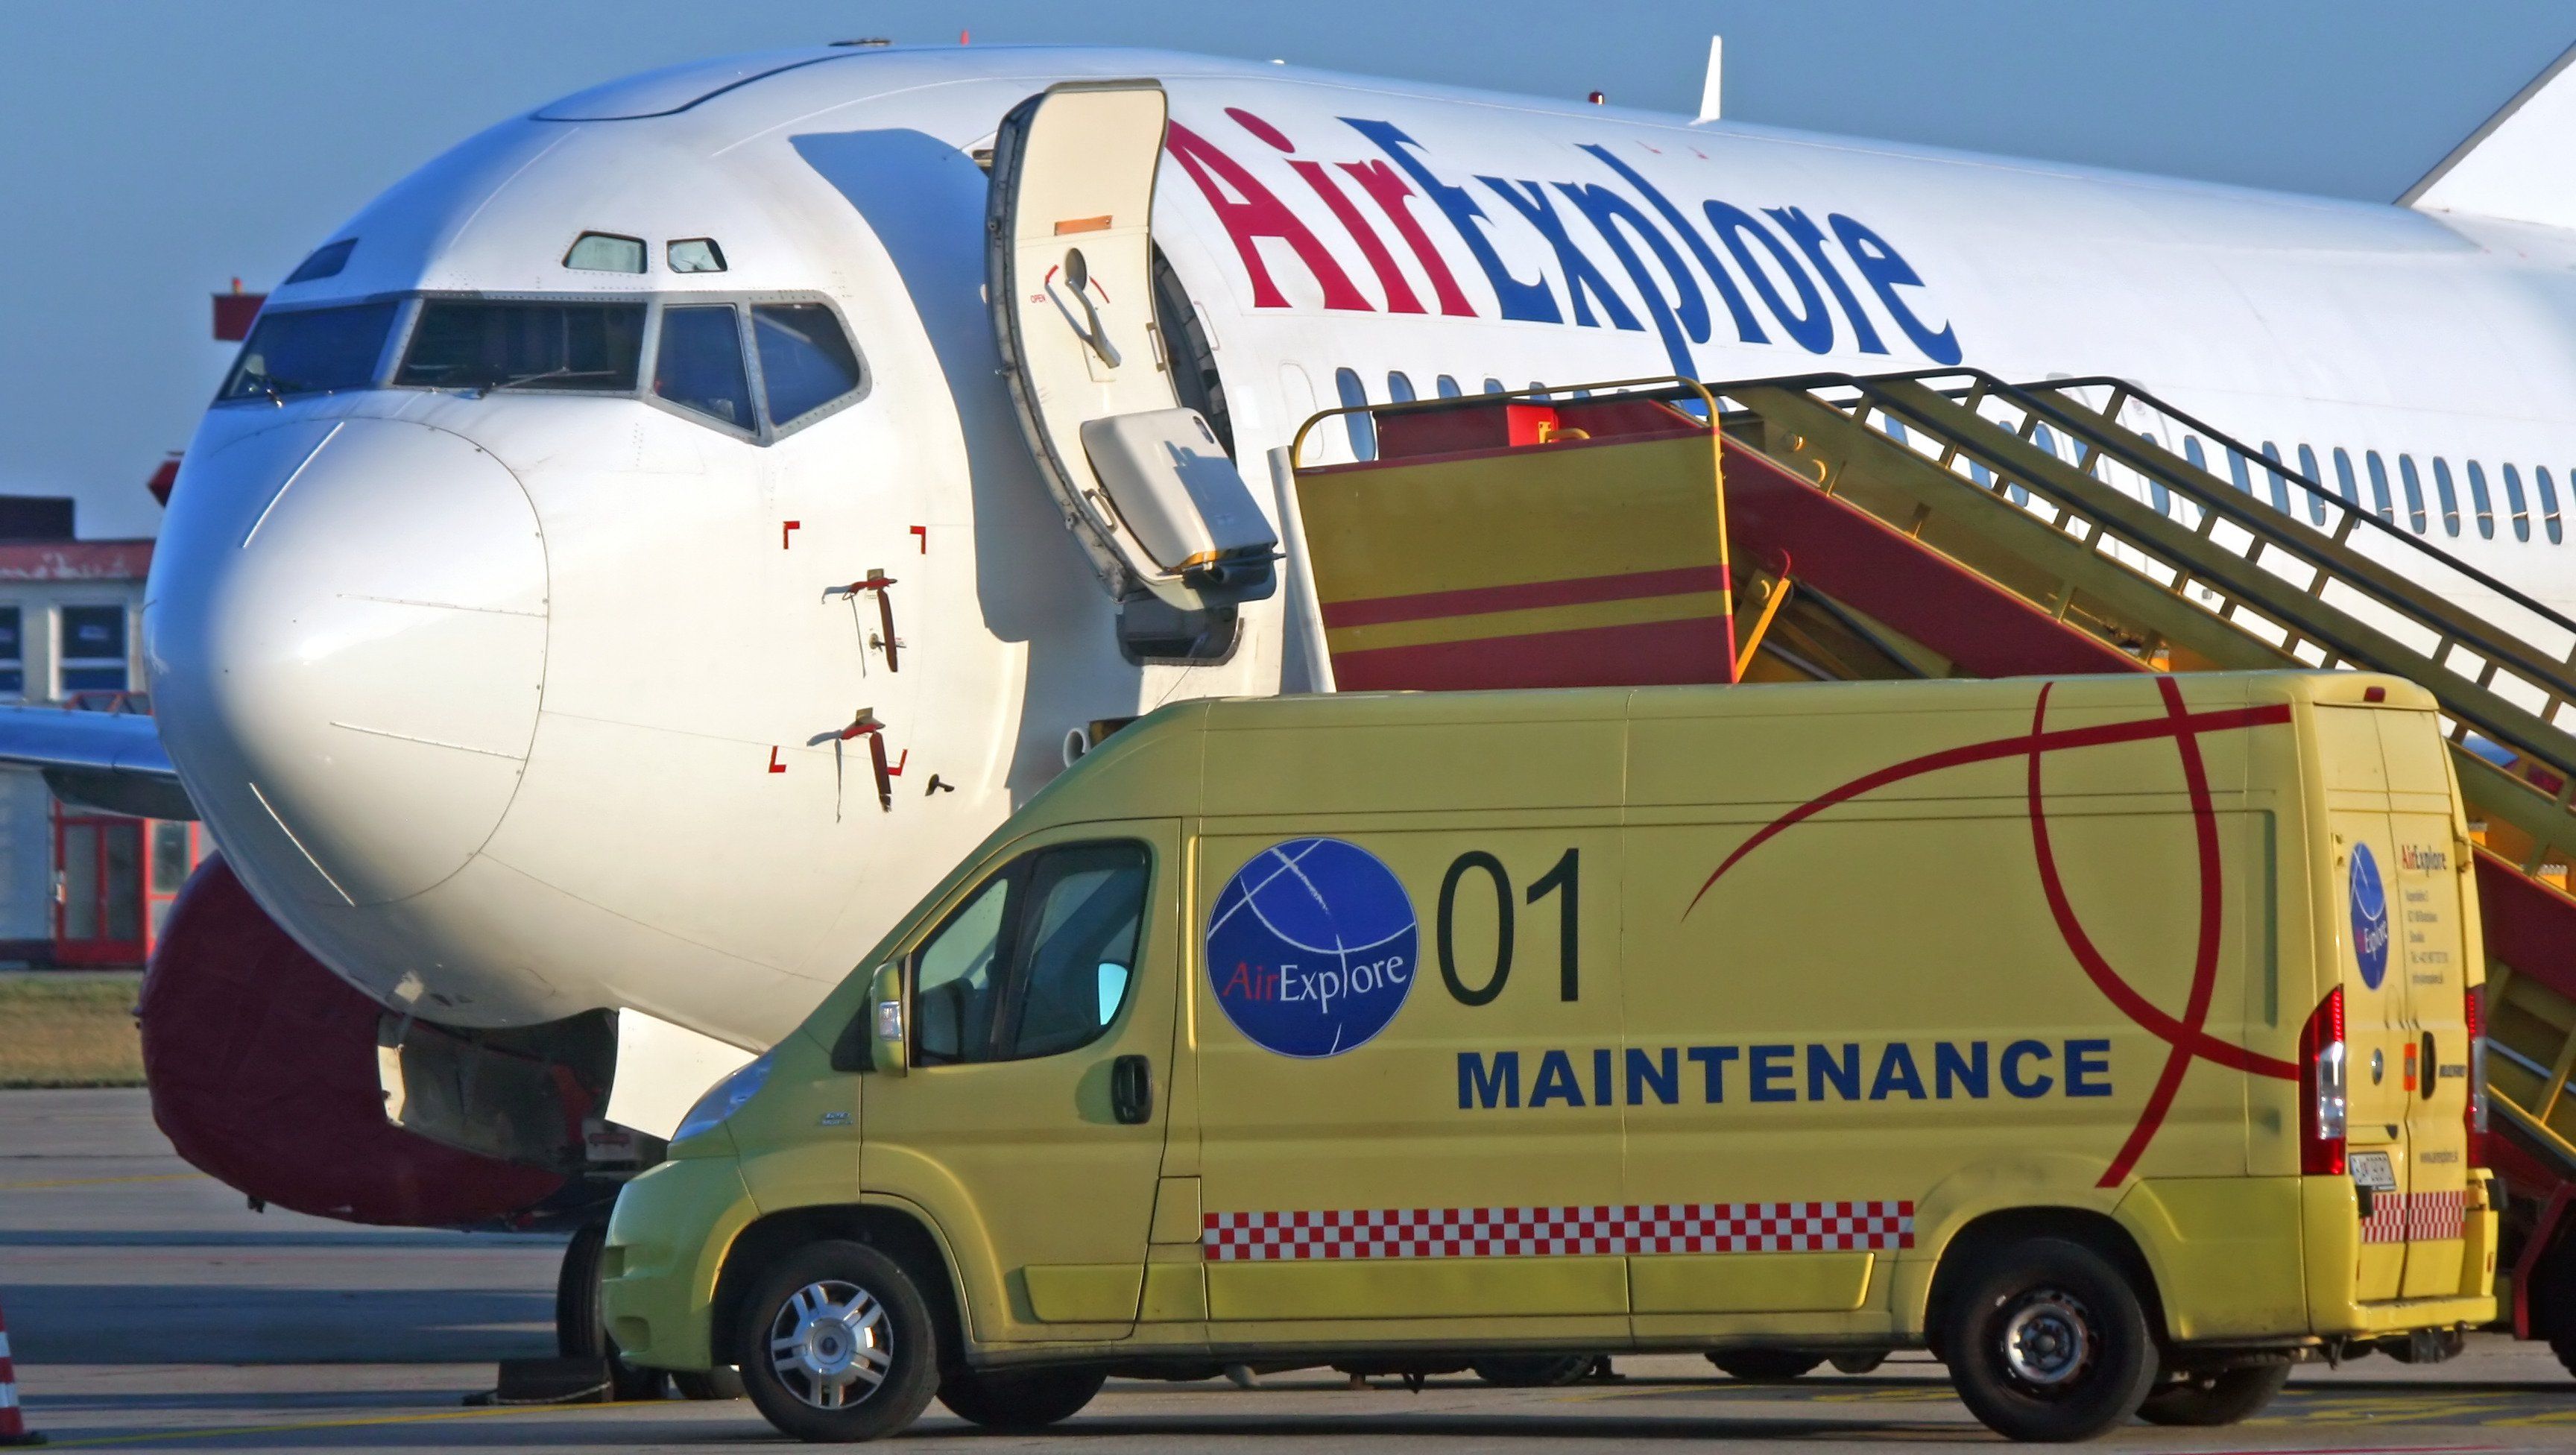 Air Explore aircraft and maintenance truck